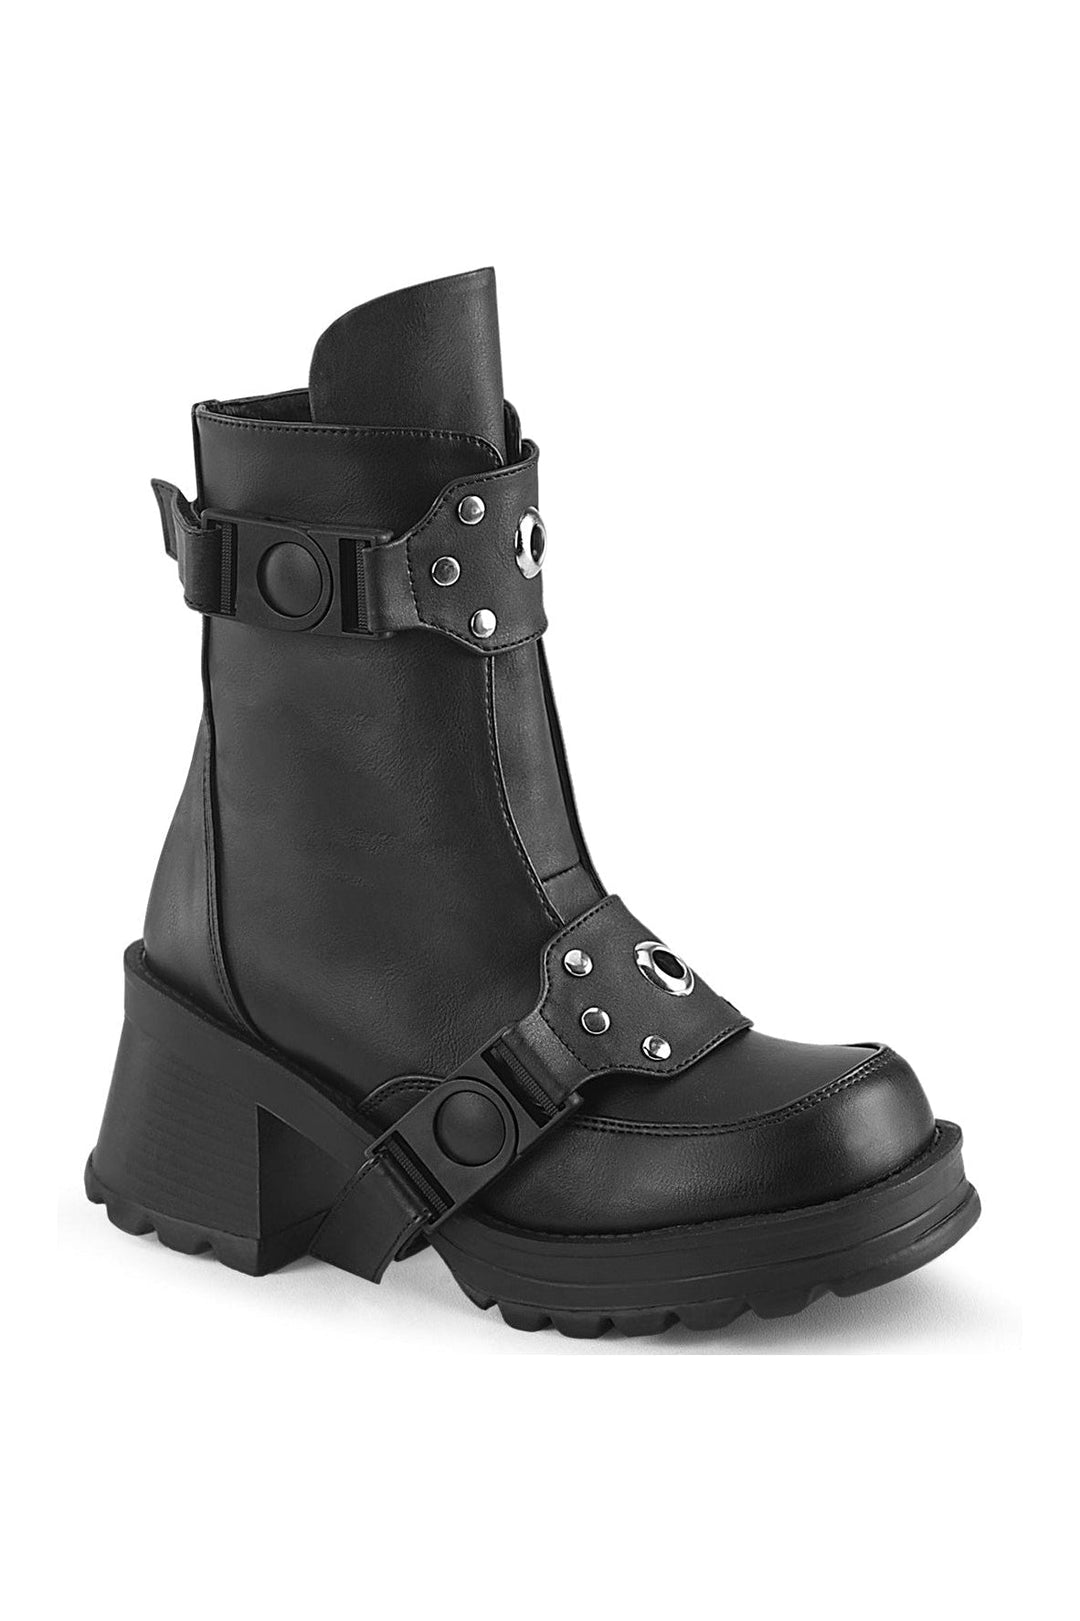 BRATTY-56 Black Vegan Leather Ankle Boot